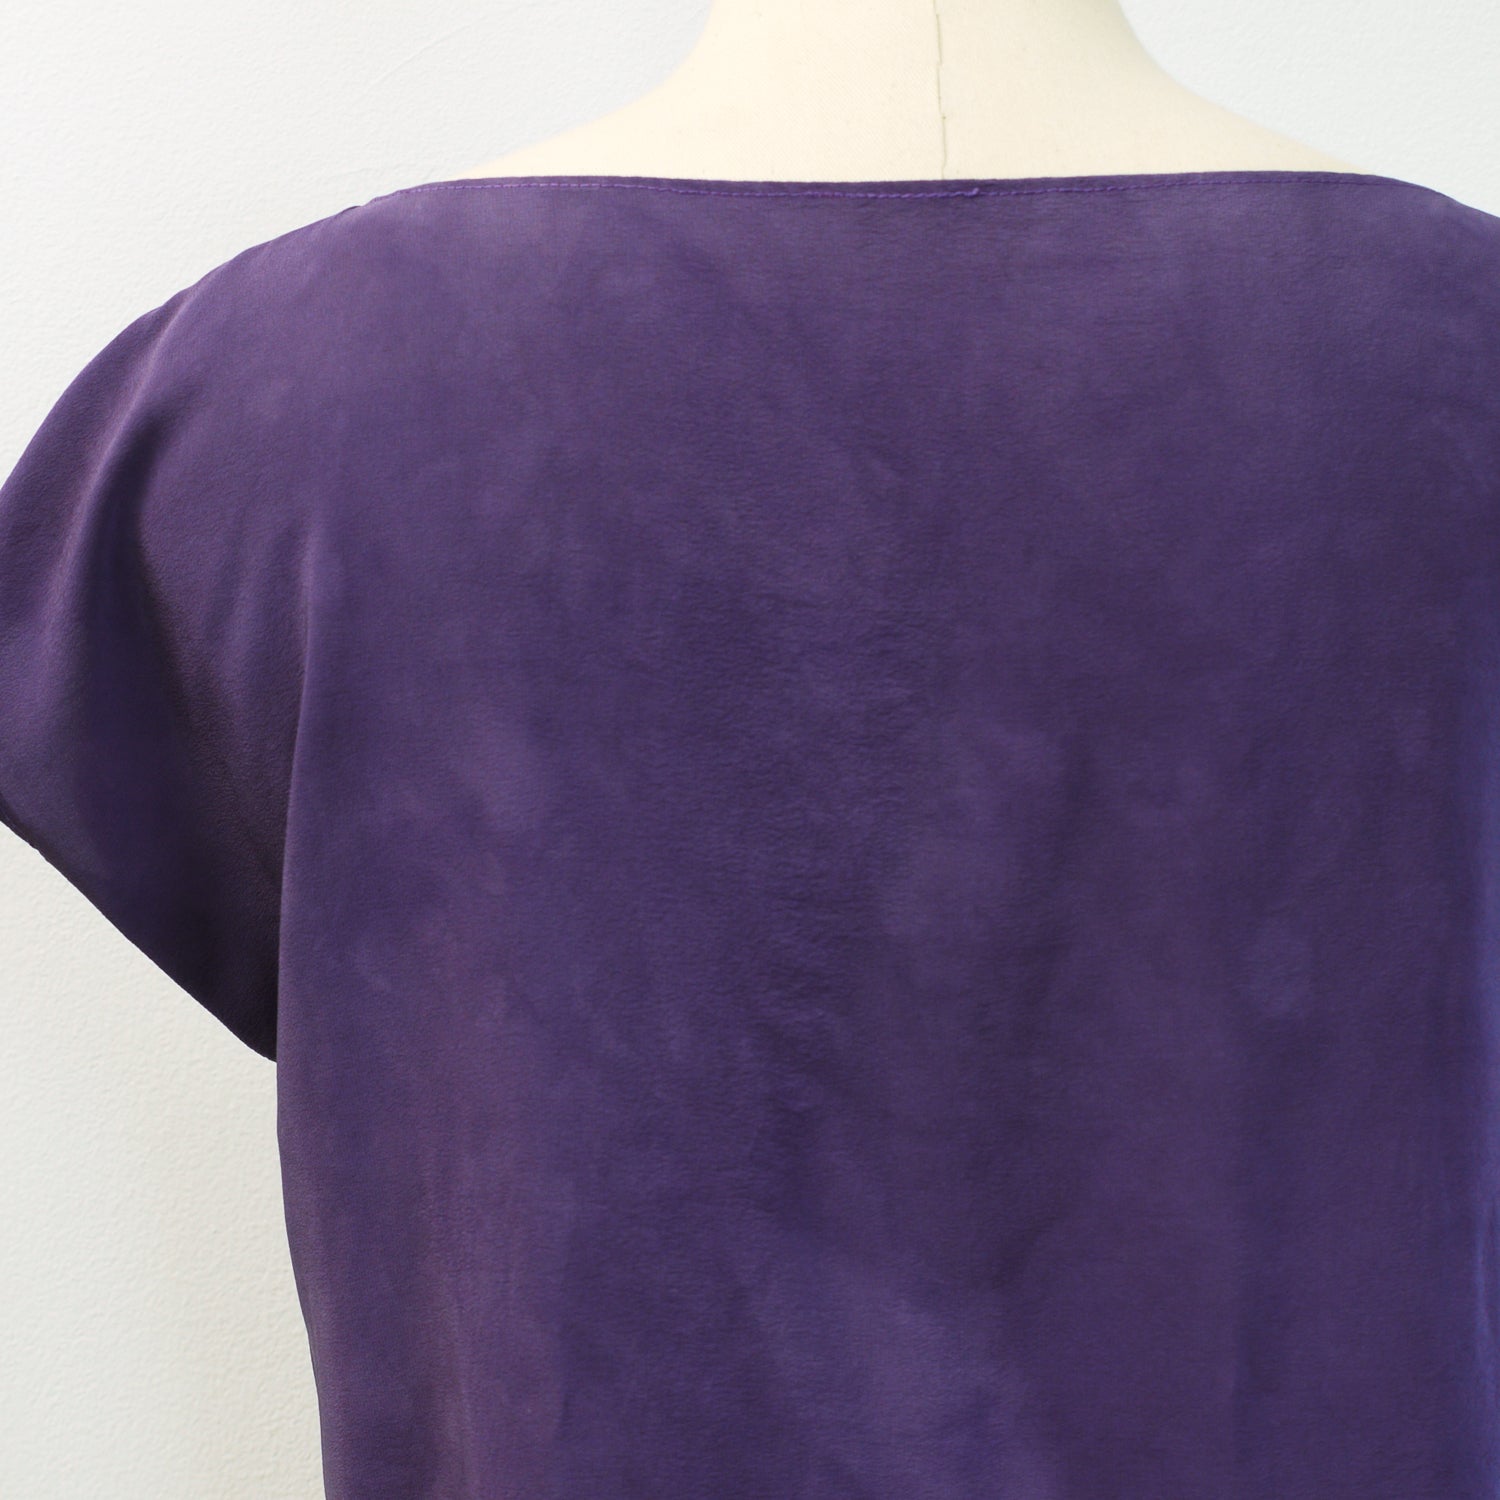 Grape silk top.  Natural dye - Logwood - silk blouse